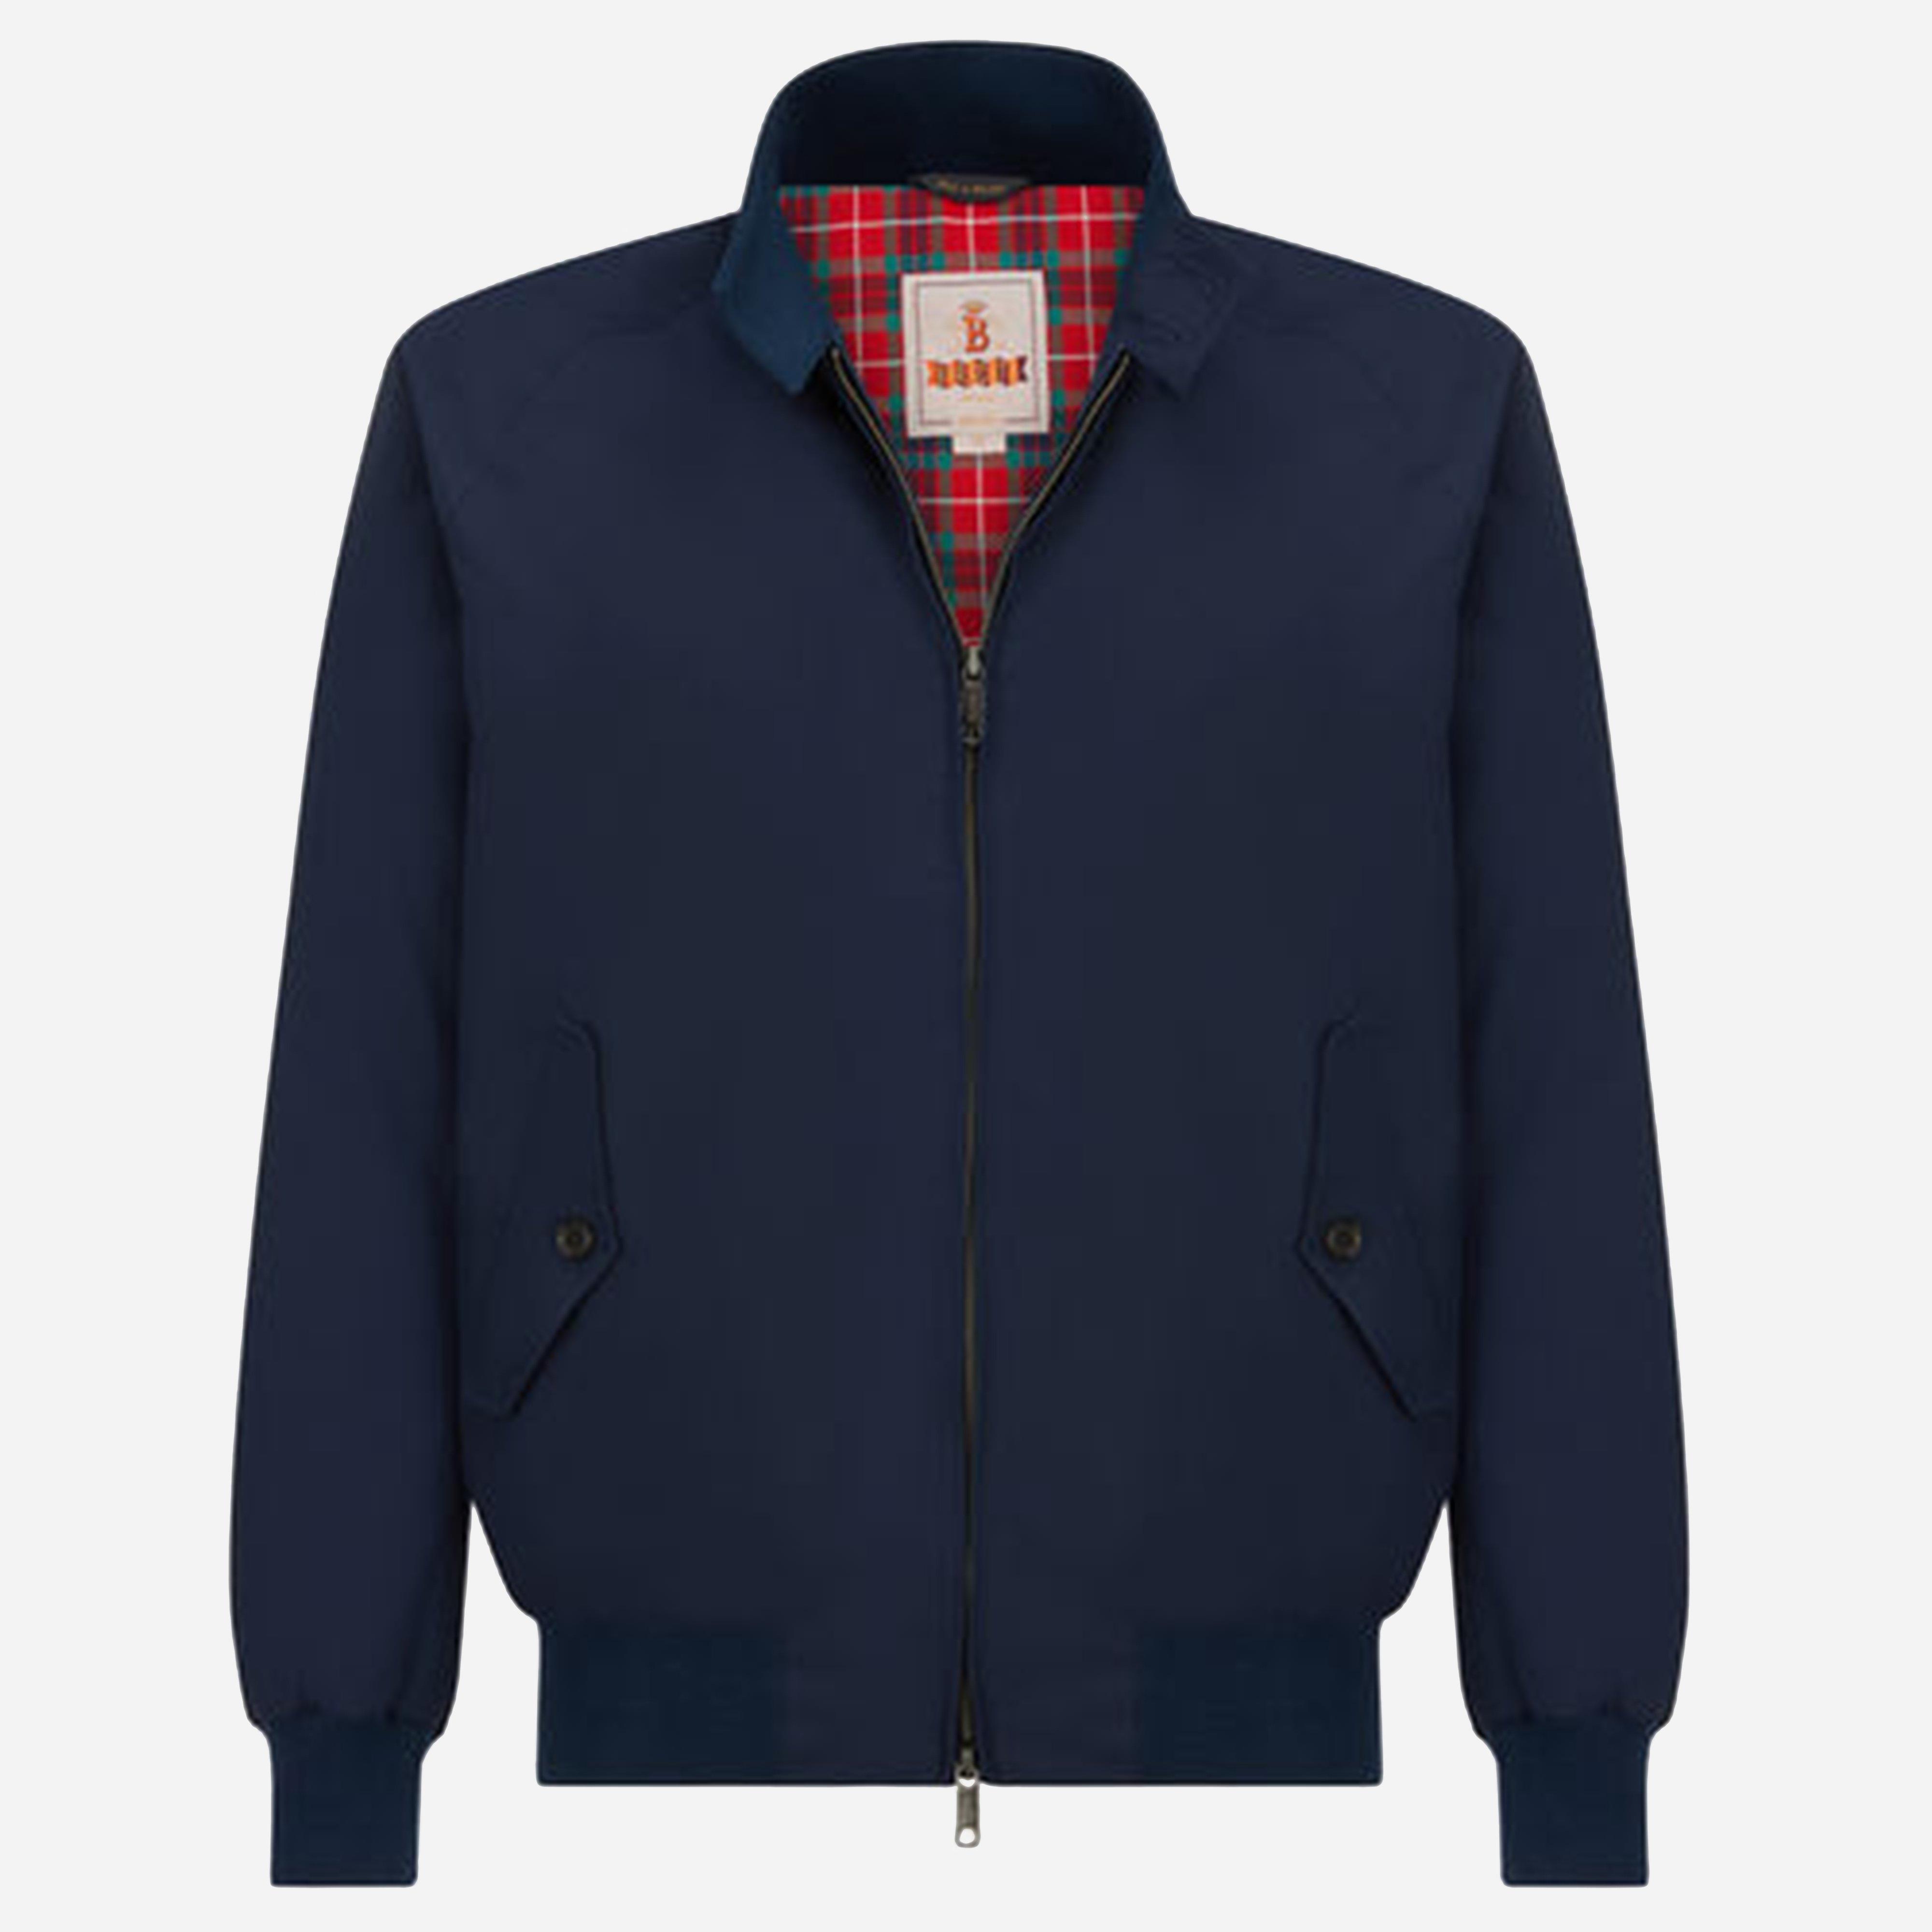 Baracuta X Engineered Garments G9 Archive Jacket in Blue for Men - Lyst